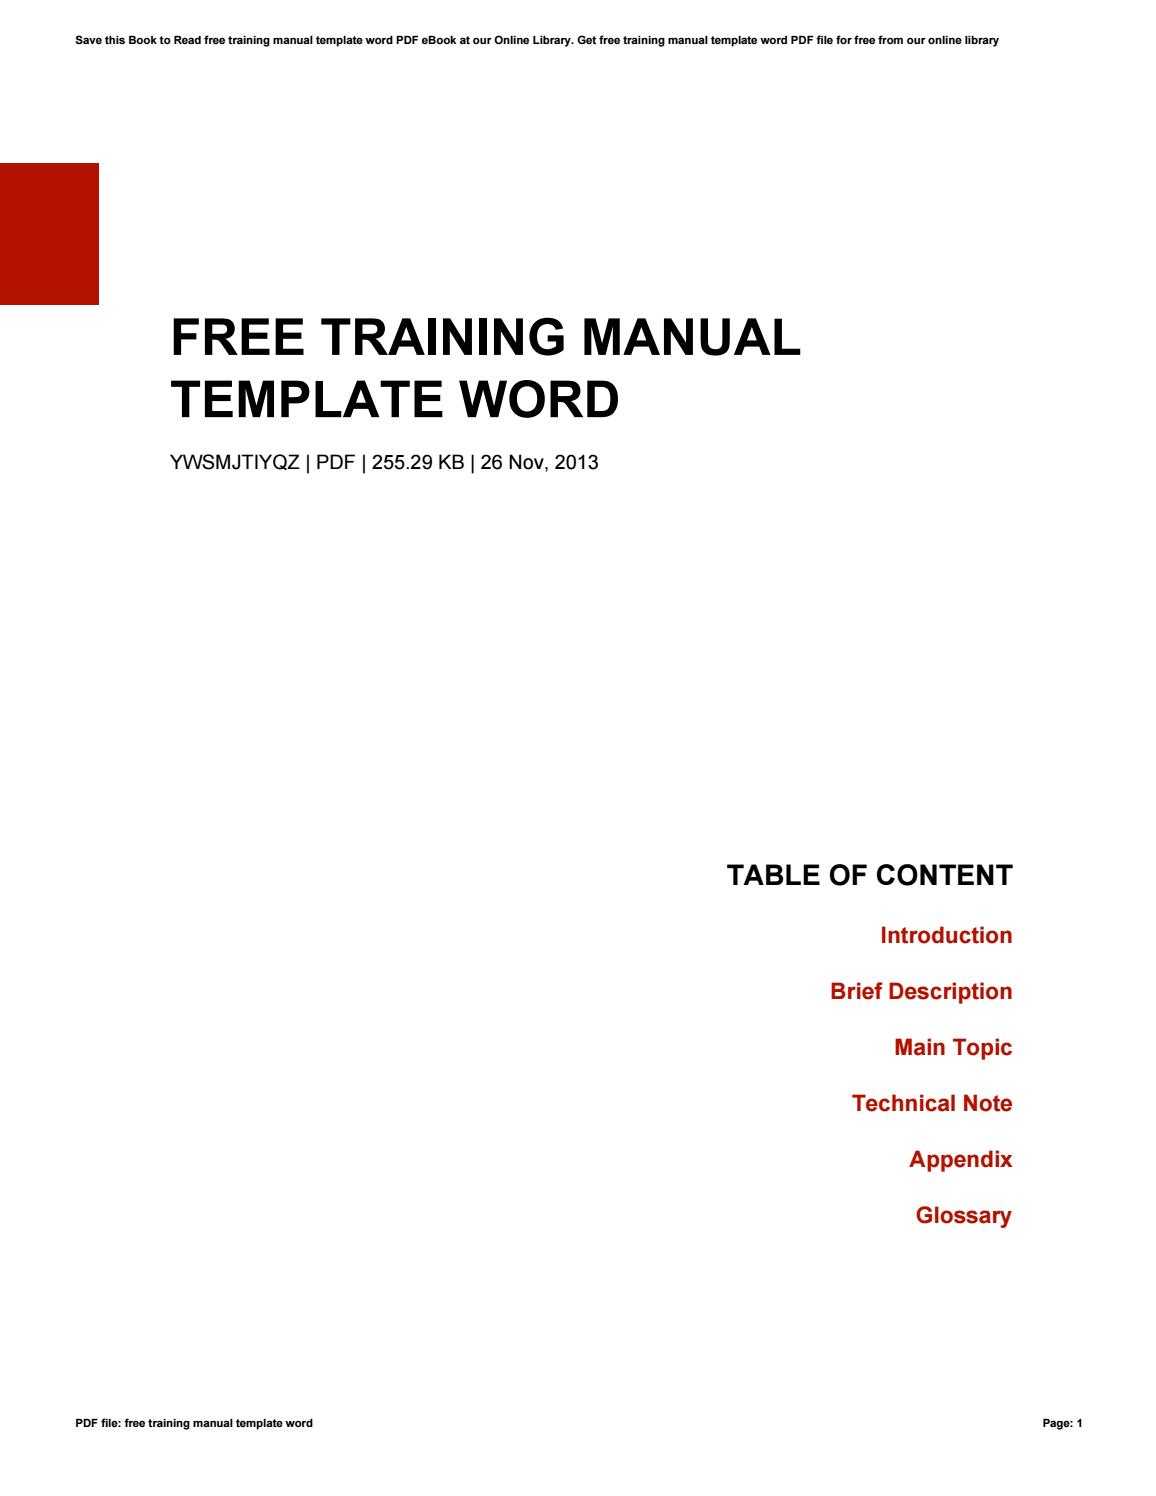 Free Training Manual Template Wordkazelink257 – Issuu For Training Documentation Template Word